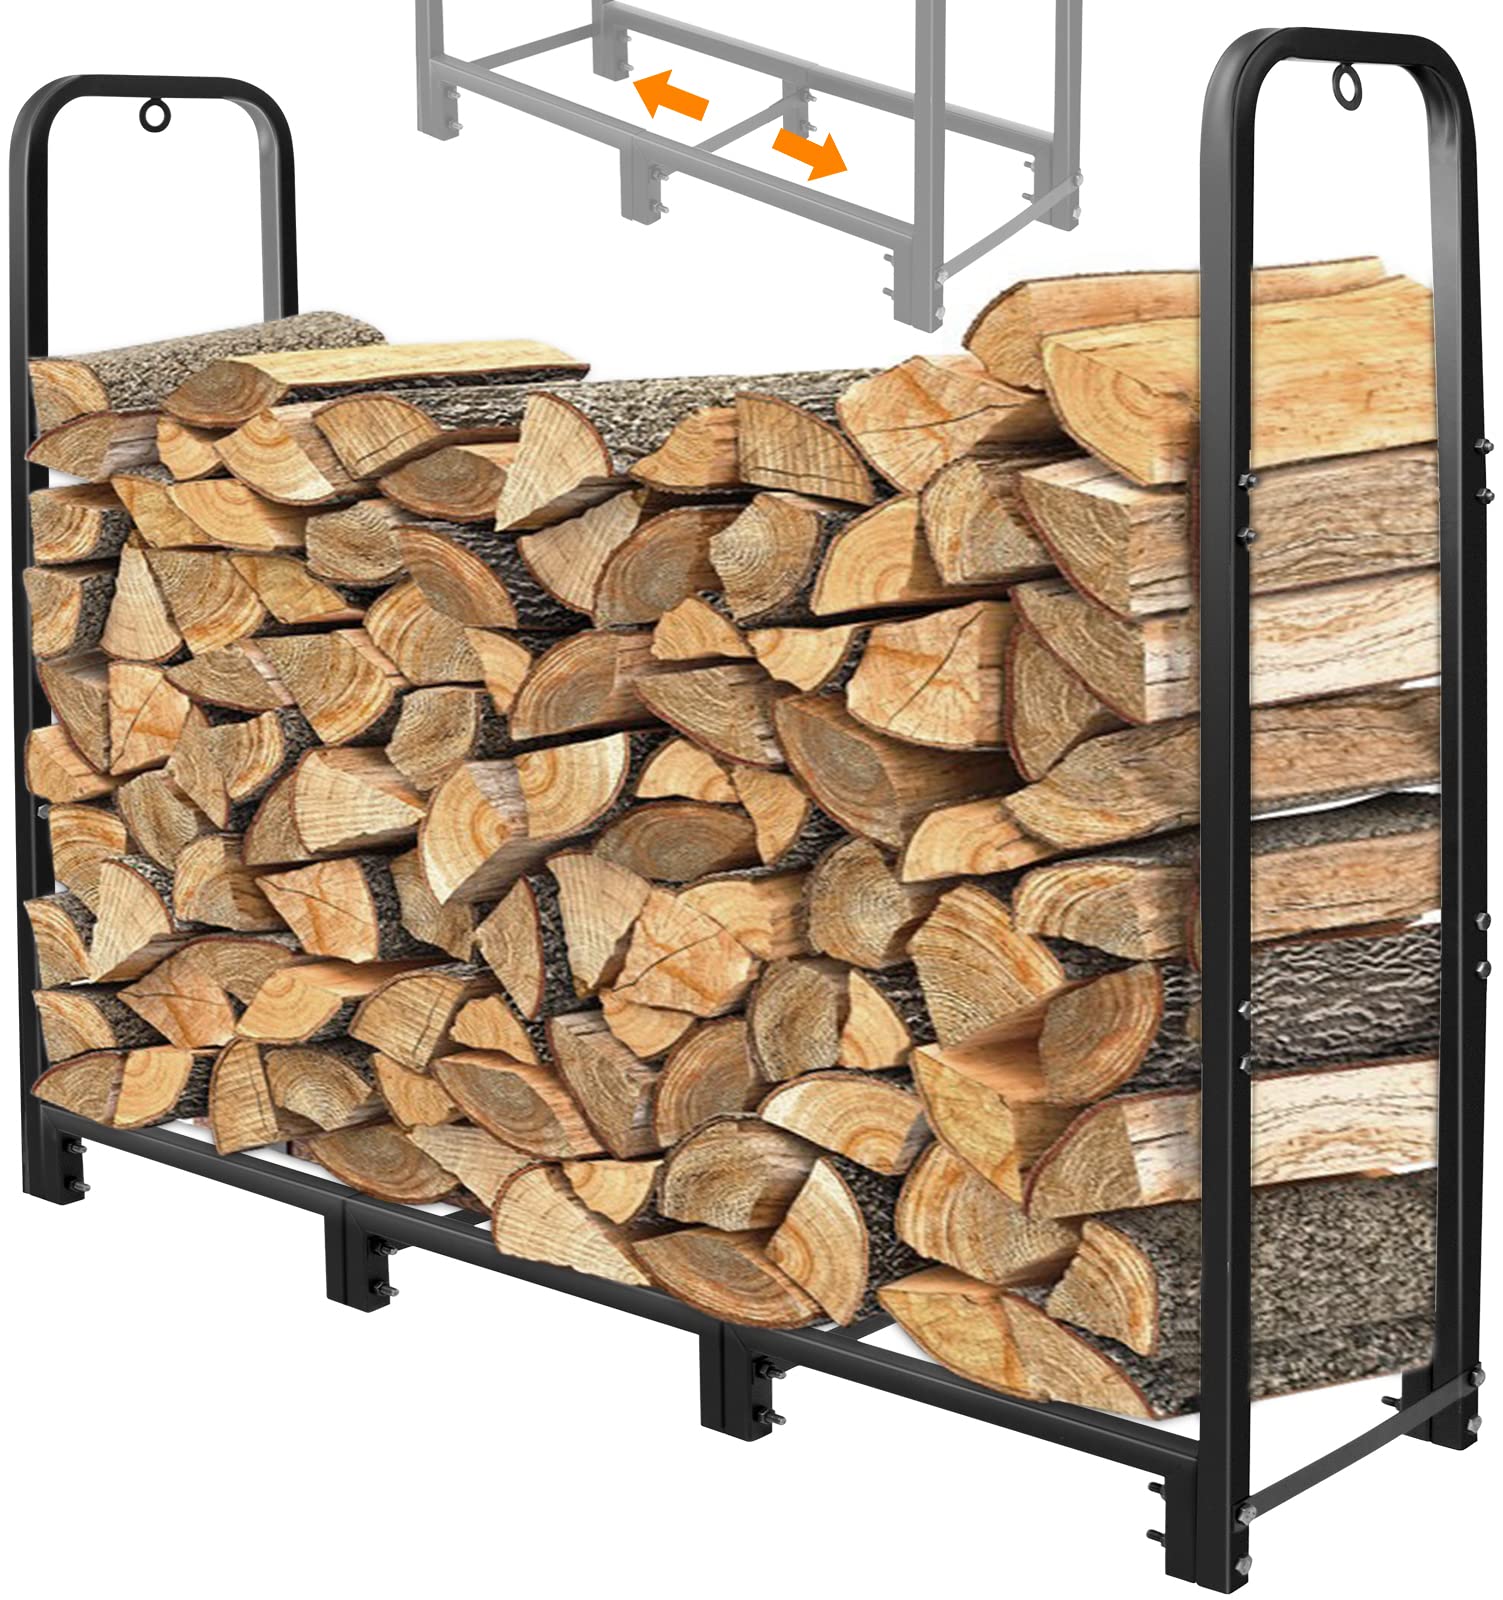 CONNOO 4ft Firewood Rack Stand Heavy Duty Firewood Log Rack Holder Fireplace Wood Storage Holder for Indoor Outdoor Metal Pile Log Stand Stacker Holder, Matte Black